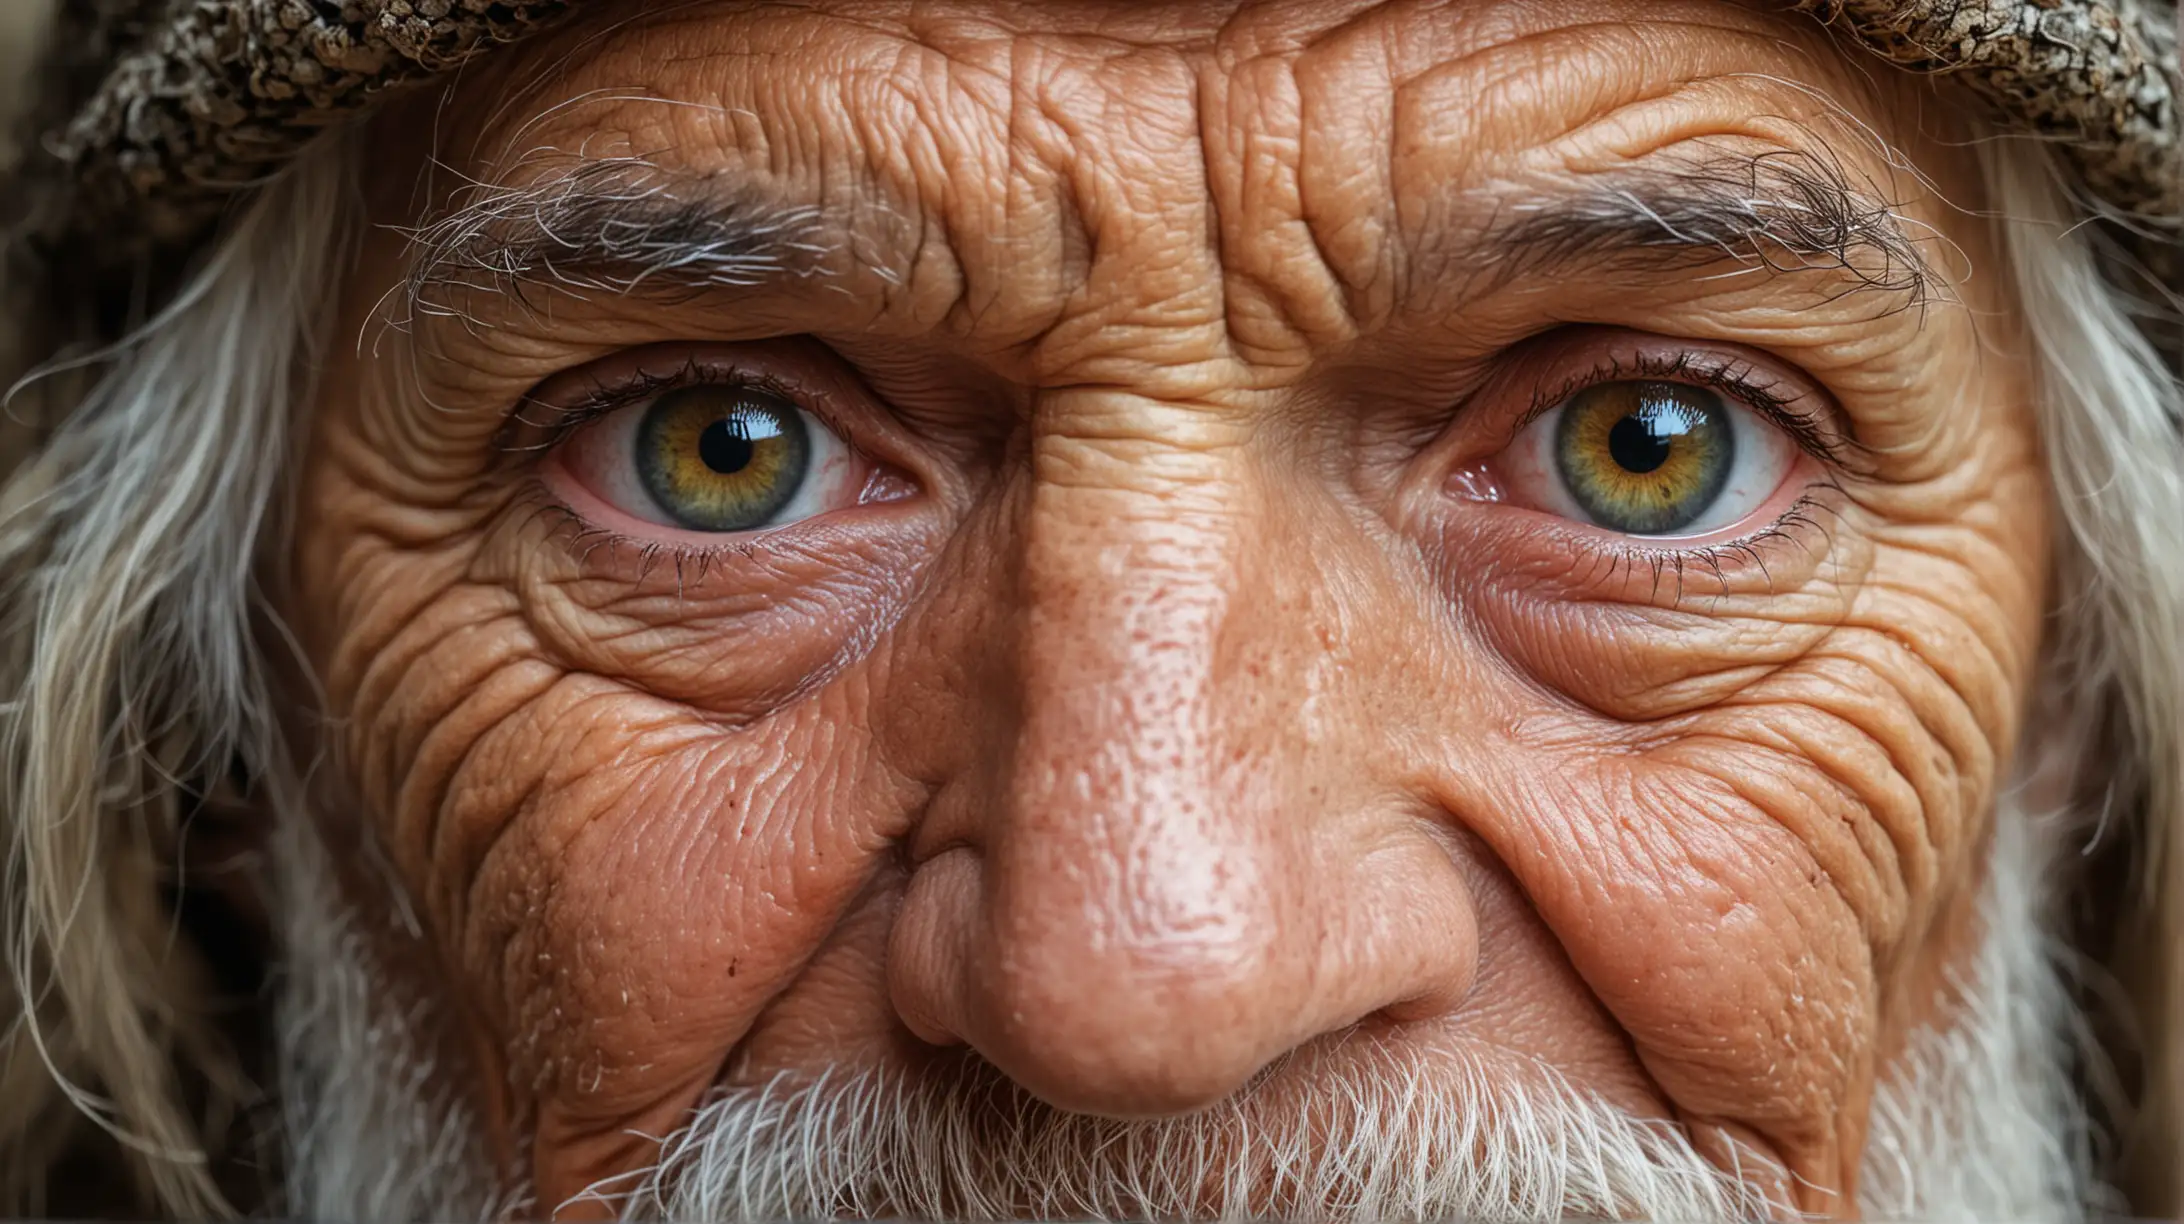 Closeup Portrait of Elder with Wise Eyes